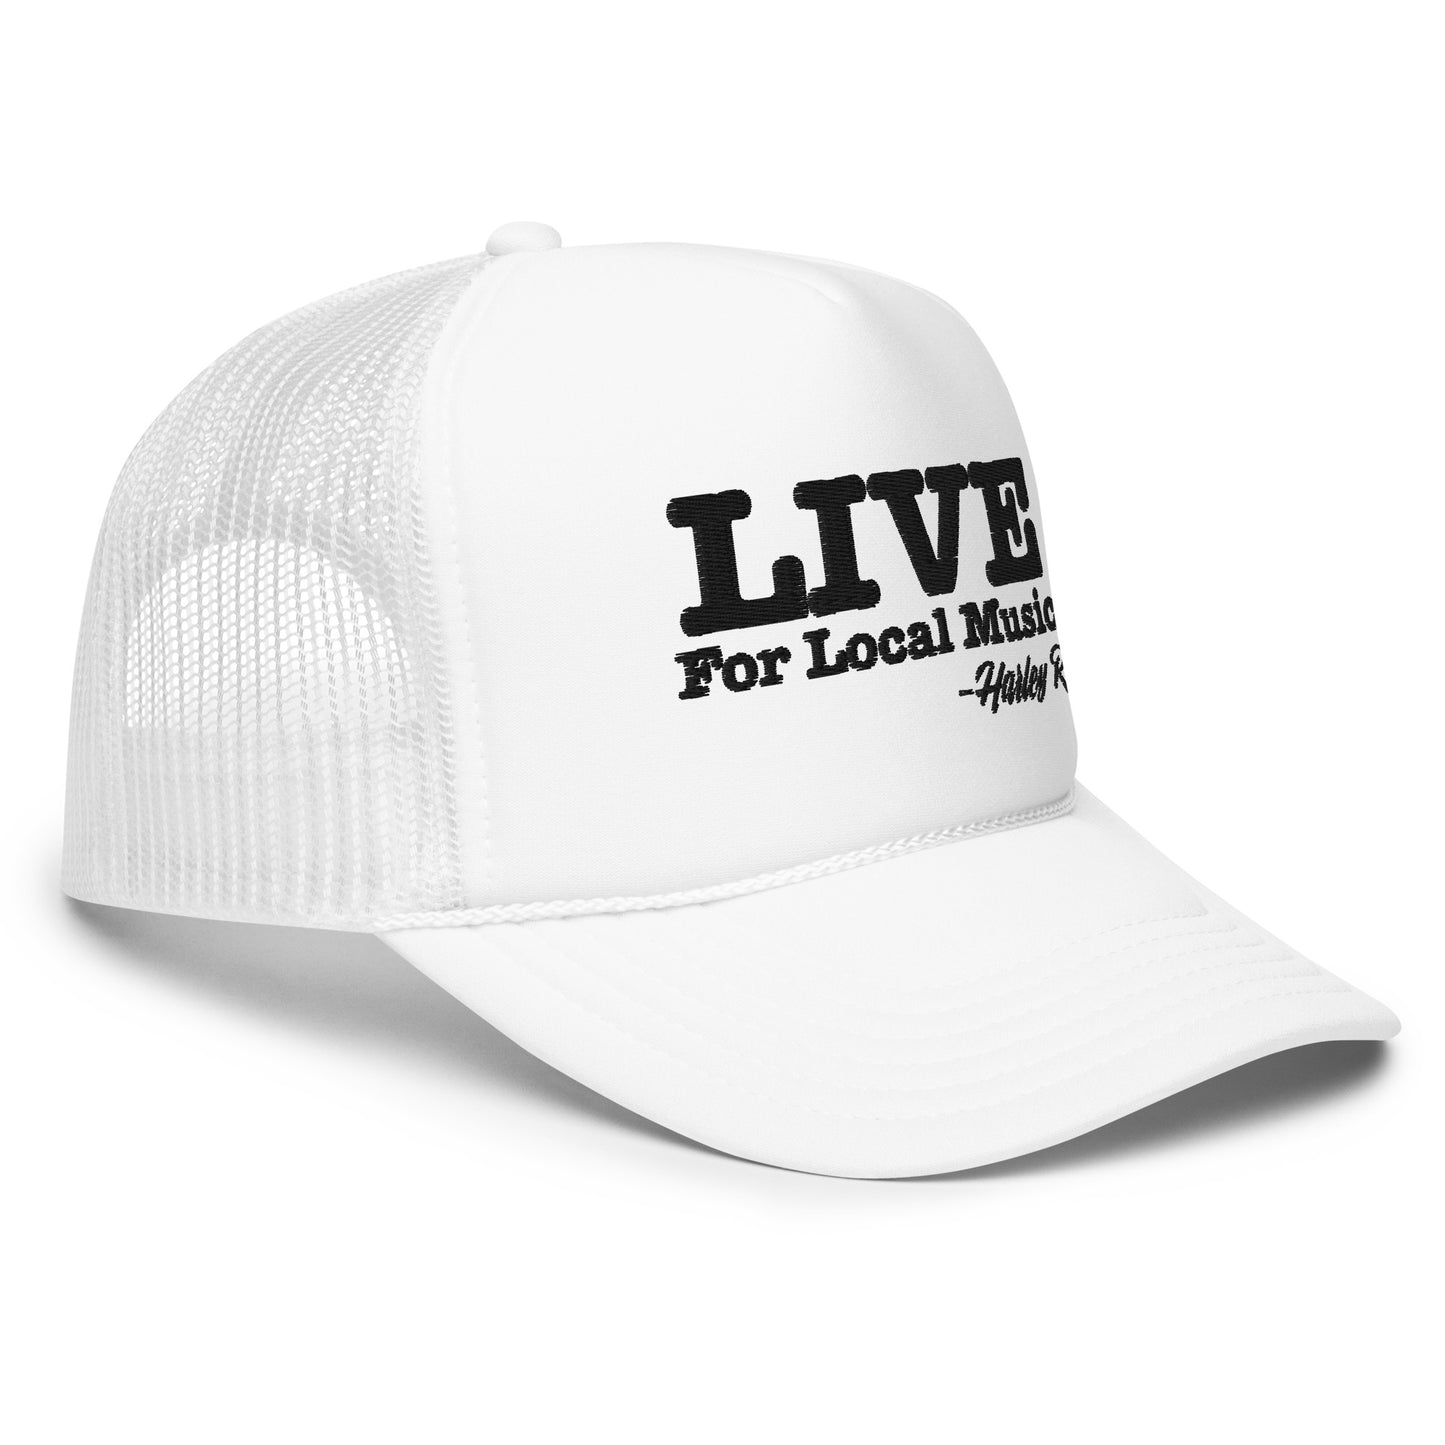 LIVE For Local Music Foam trucker hat